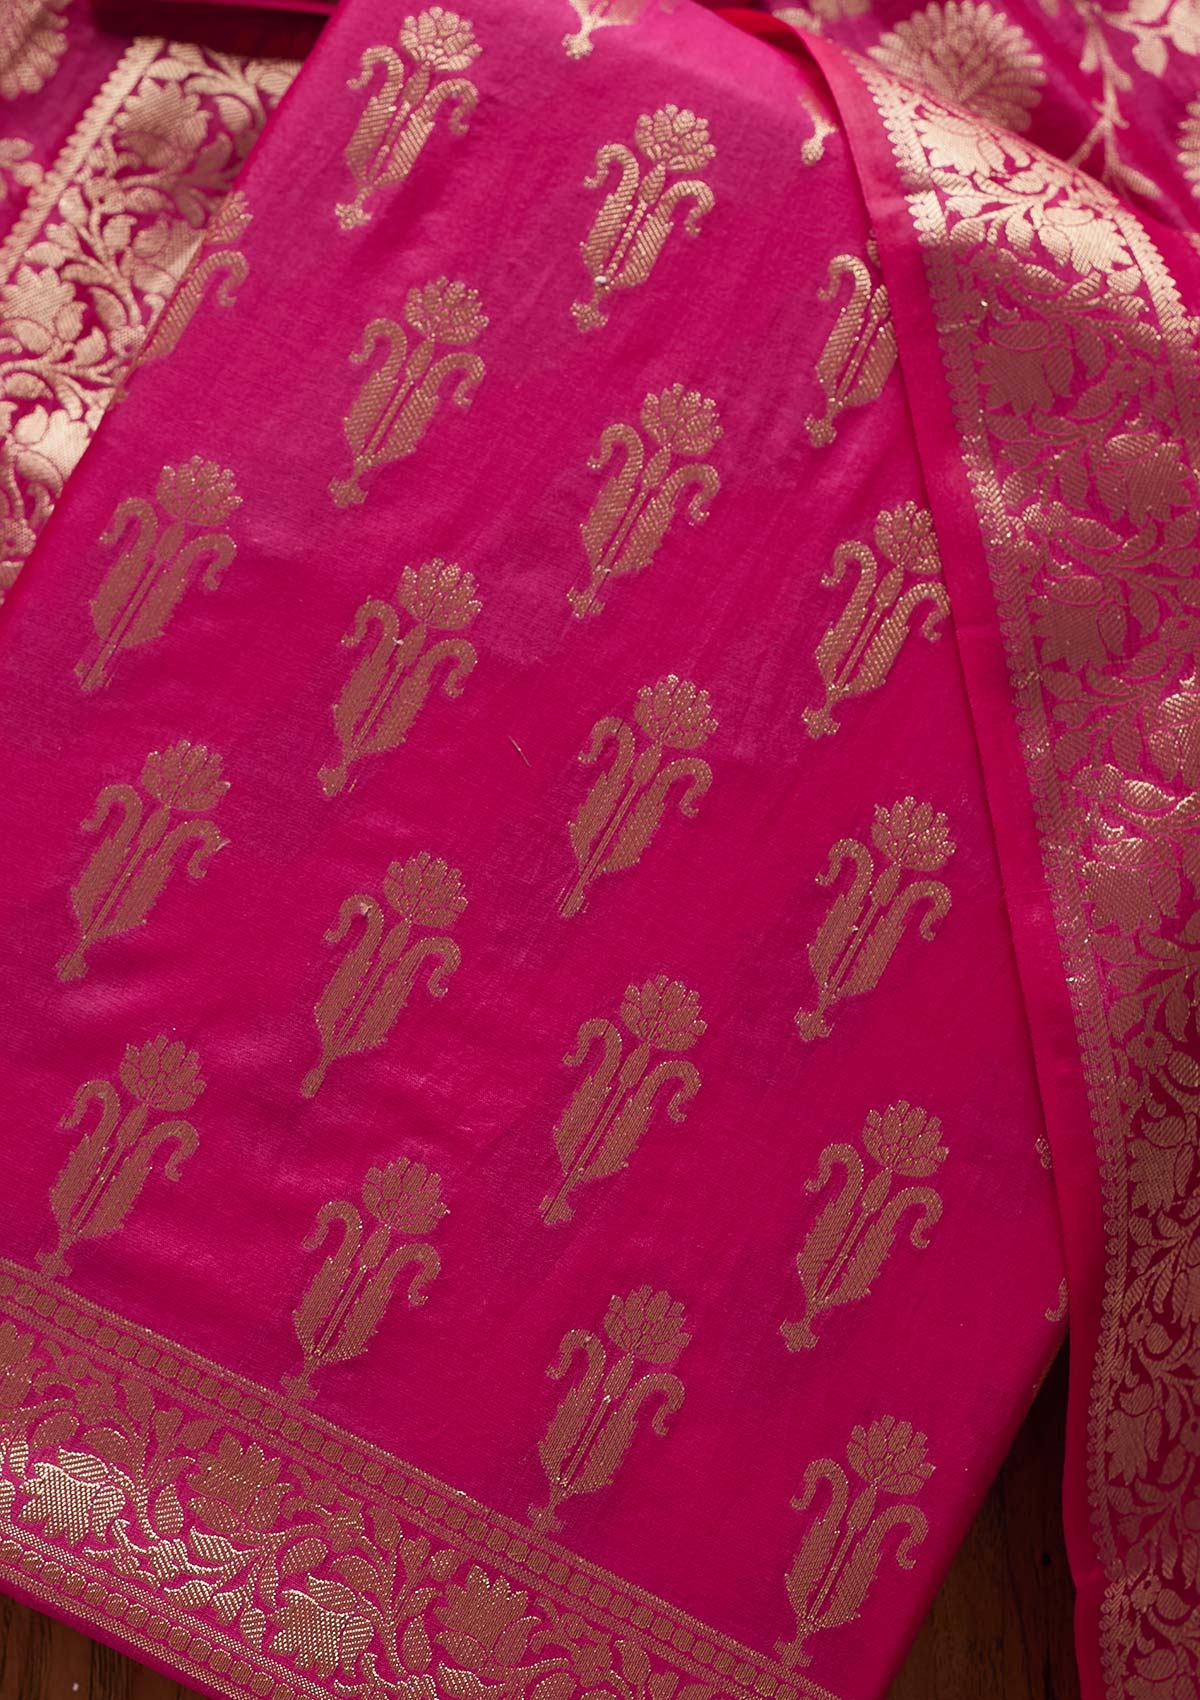 Brocade Suit Designs|Brocade Kurti Designs|Banarasi Suit|Banarasi Kurti| Banarasi/Brocade Dresses - YouTube